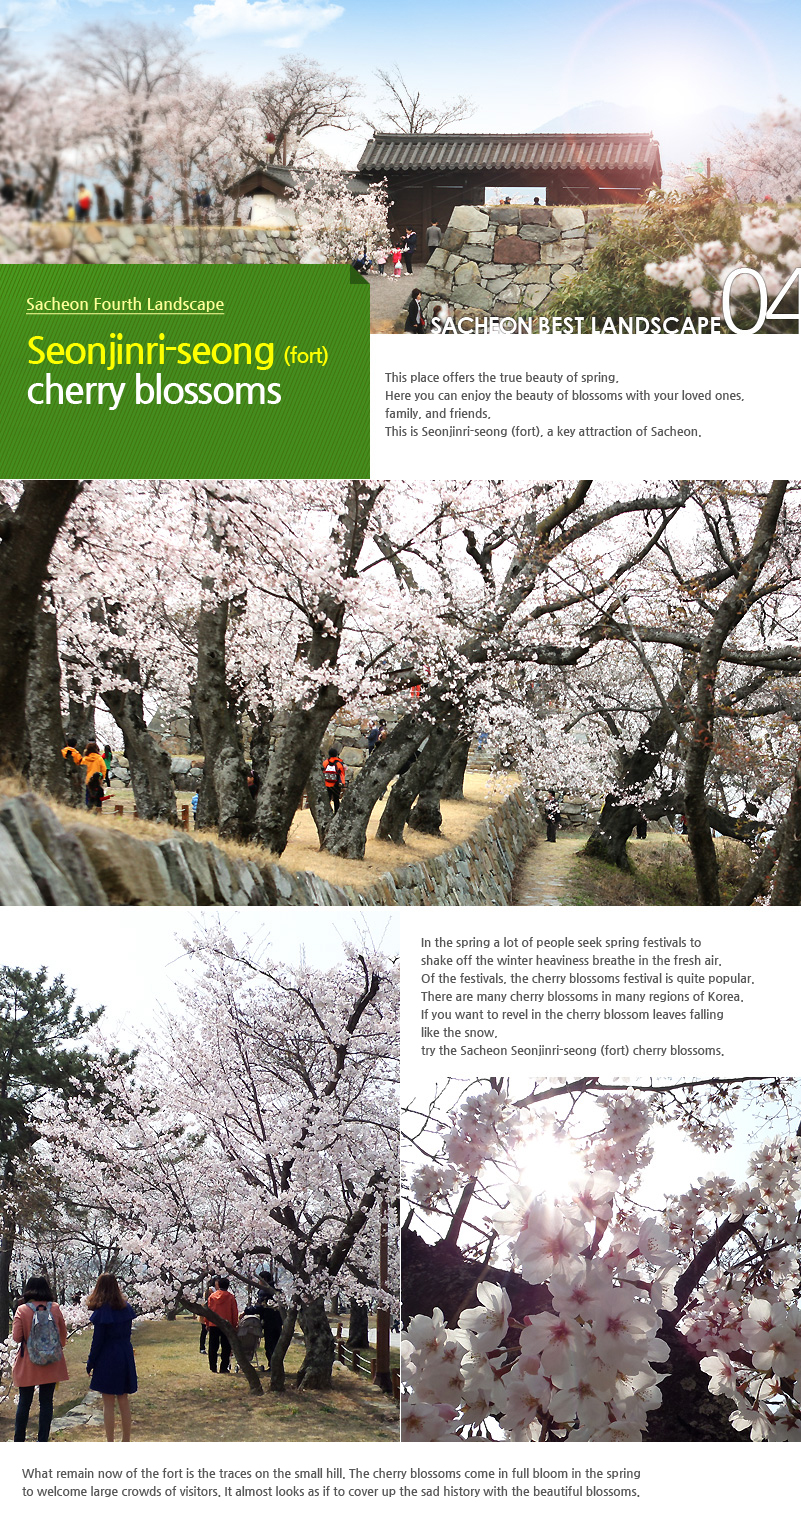 Seonjinri-seong (fort) cherry blossoms